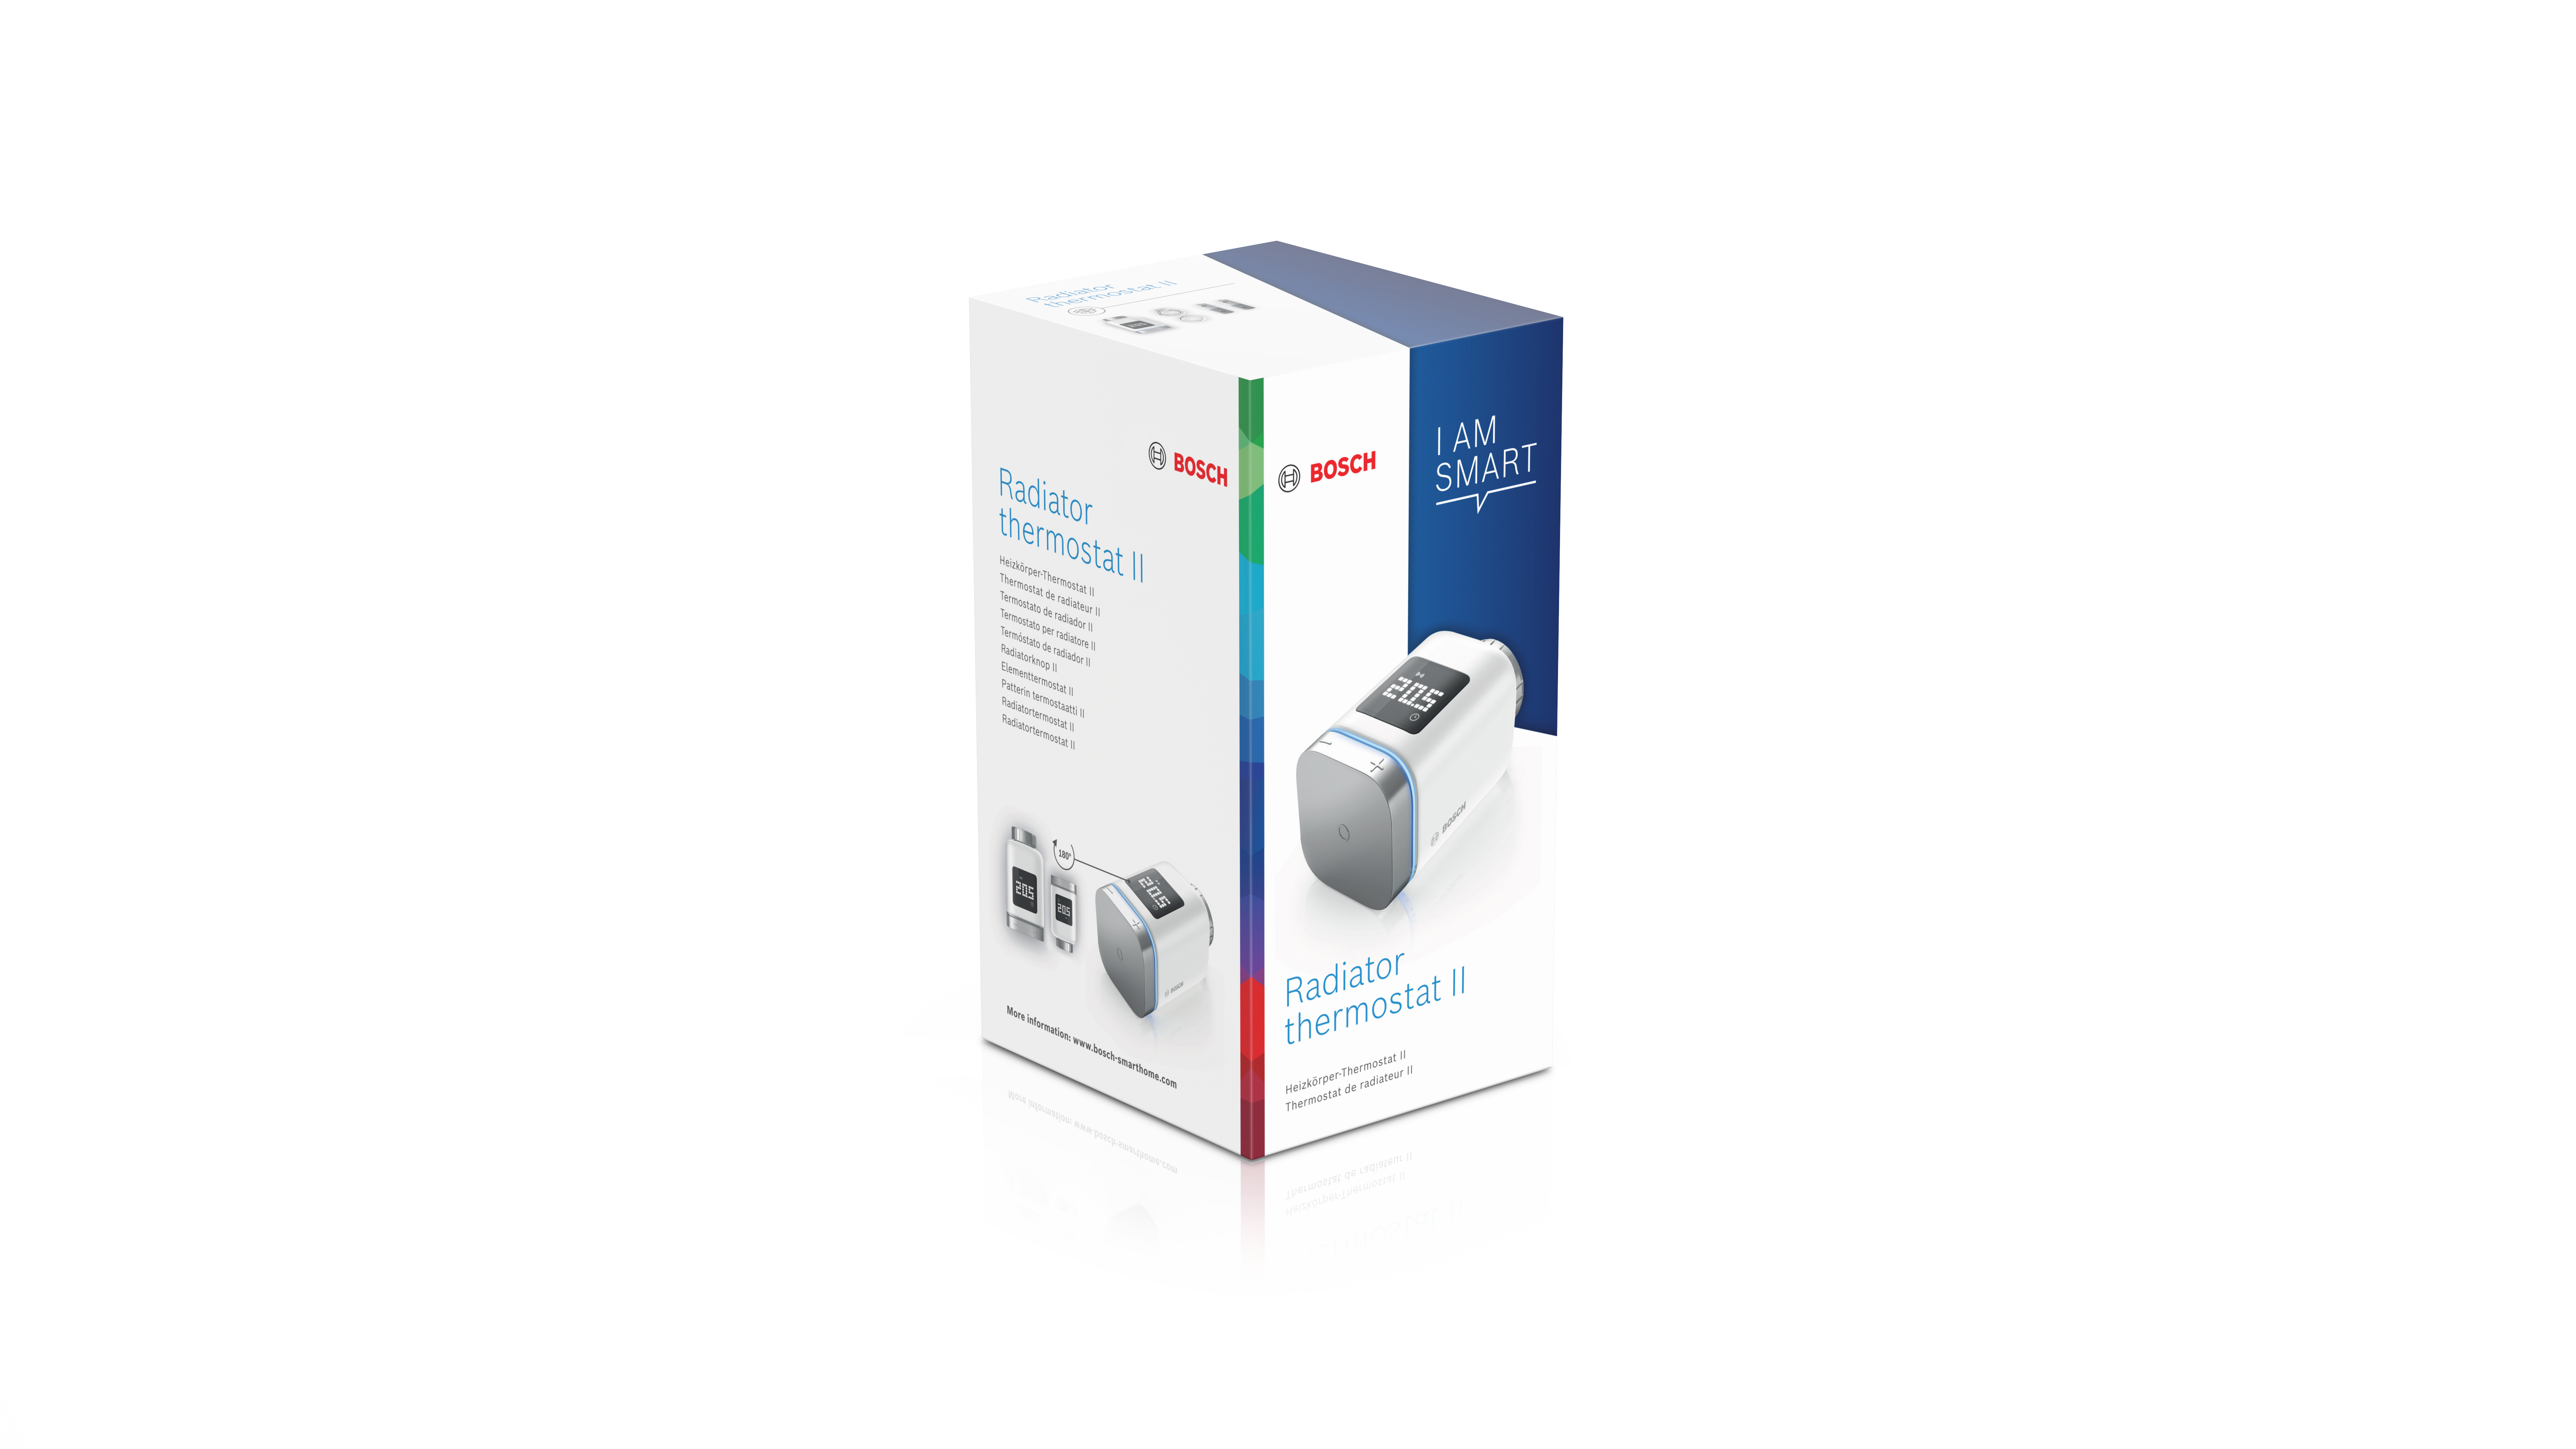 Bosch Smart Home Heizkörper-Thermostat